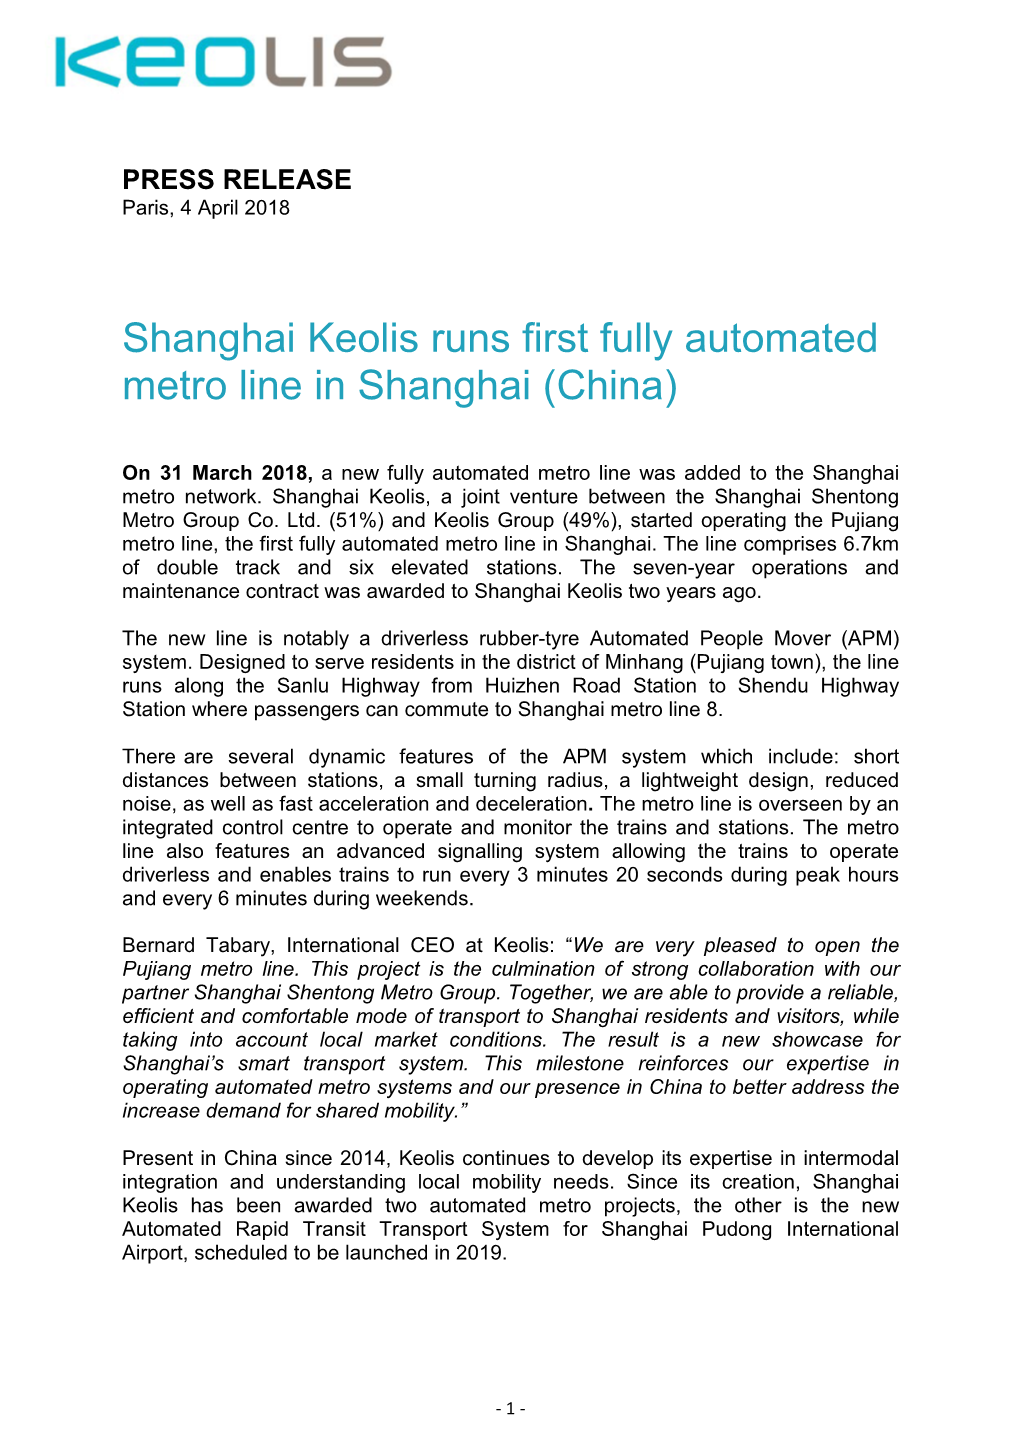 Shanghai Keolis Runs First Fully Automated Metro Line in Shanghai (China)